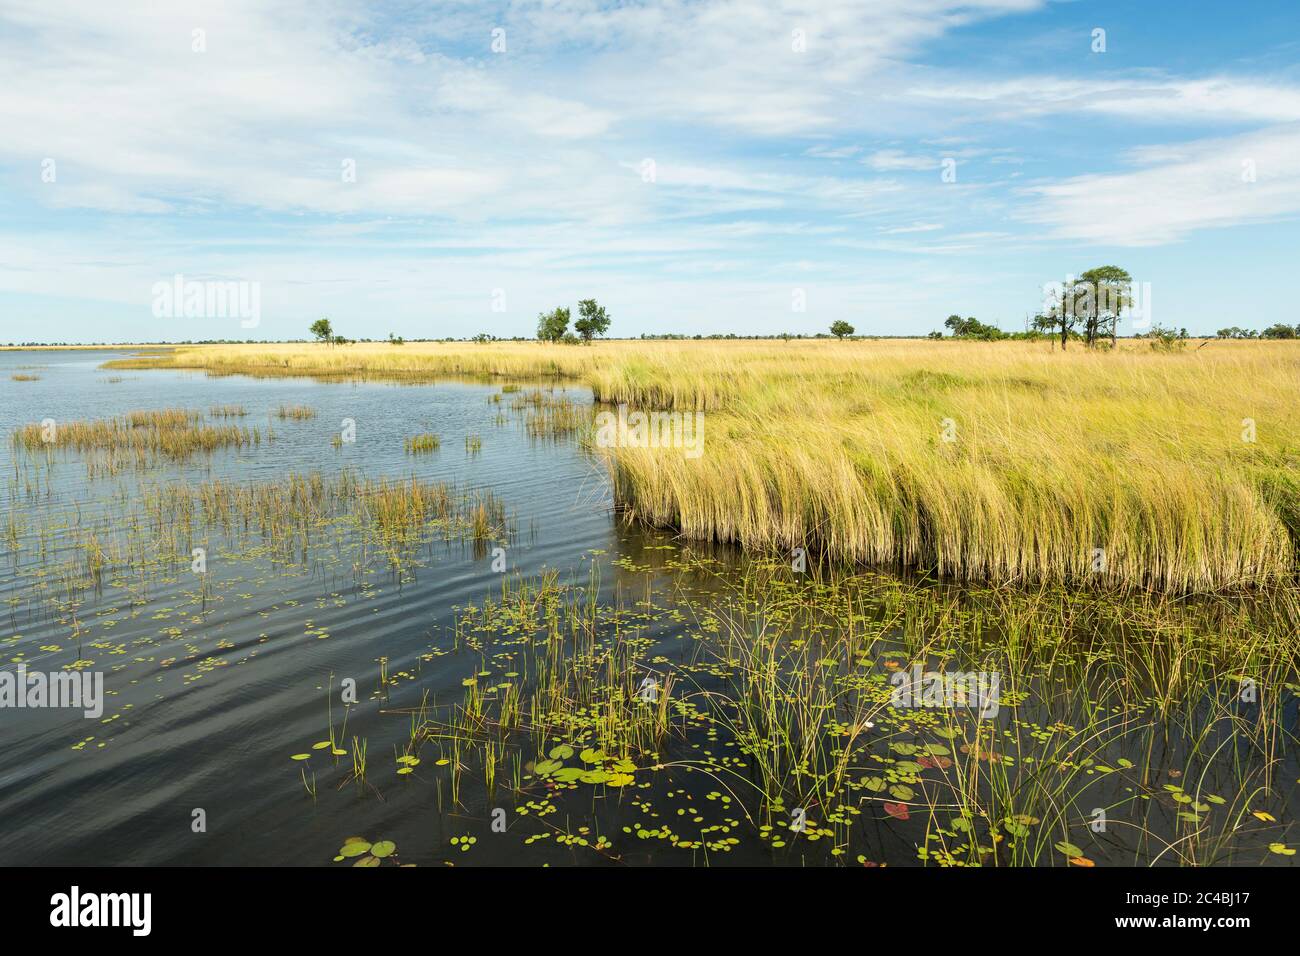 Reedbeds and waterways in the Okavango Delta, Botswana Stock Photo